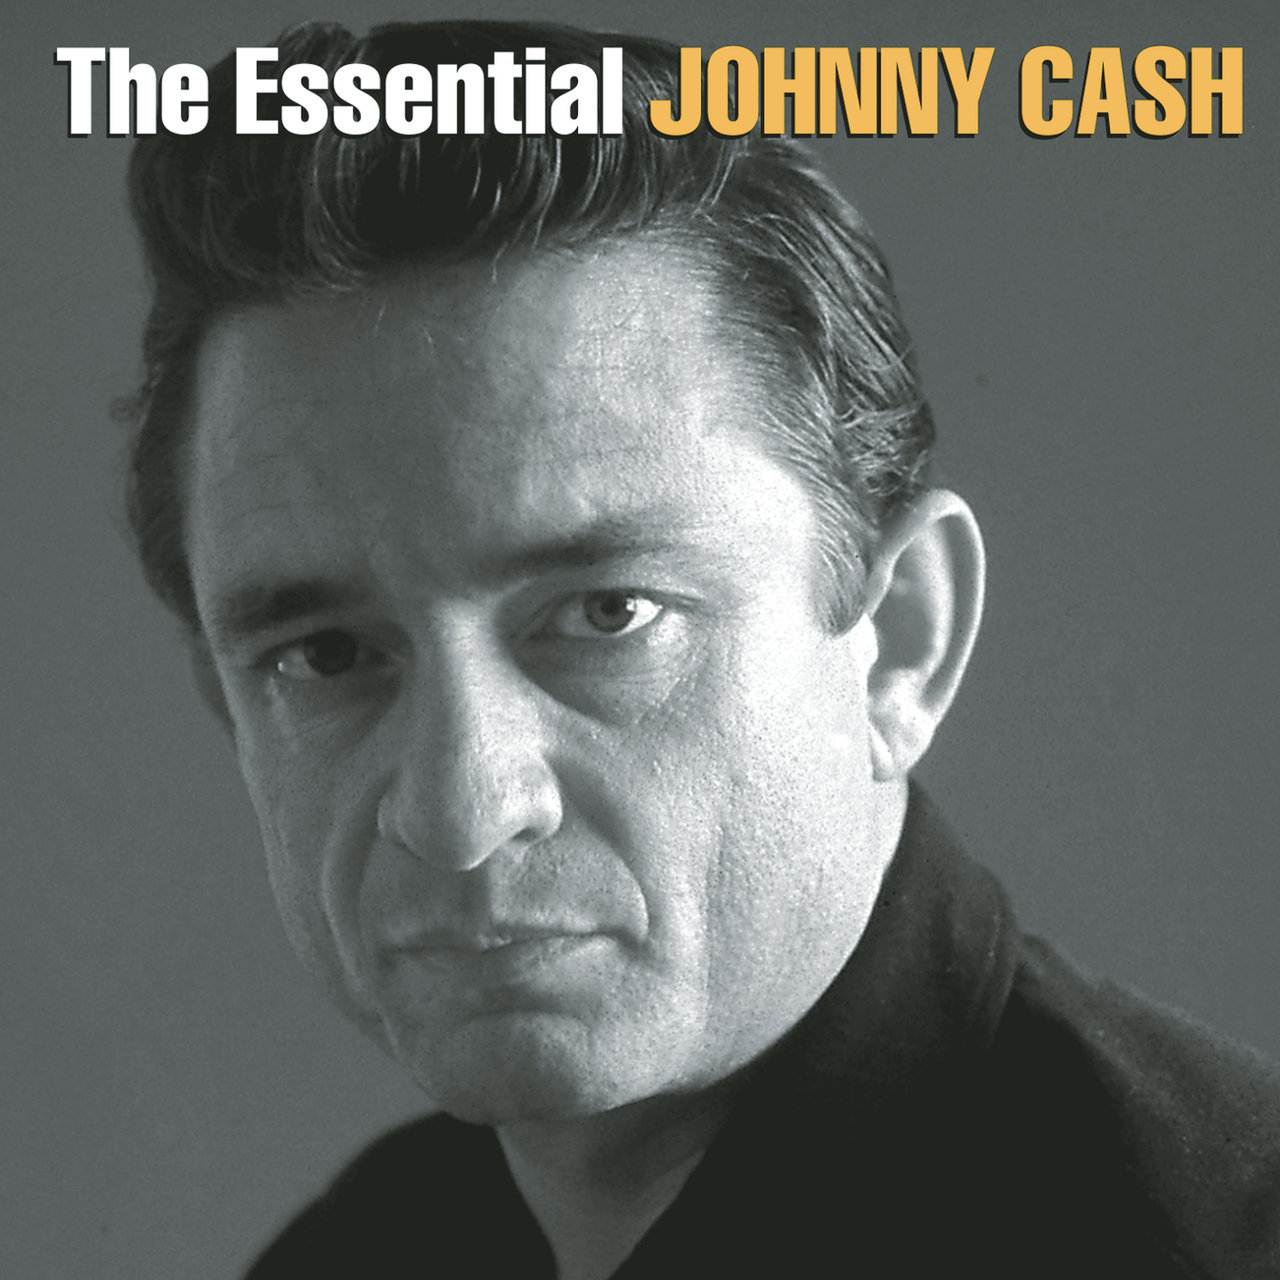 The Essential Johnny Cash [1991]